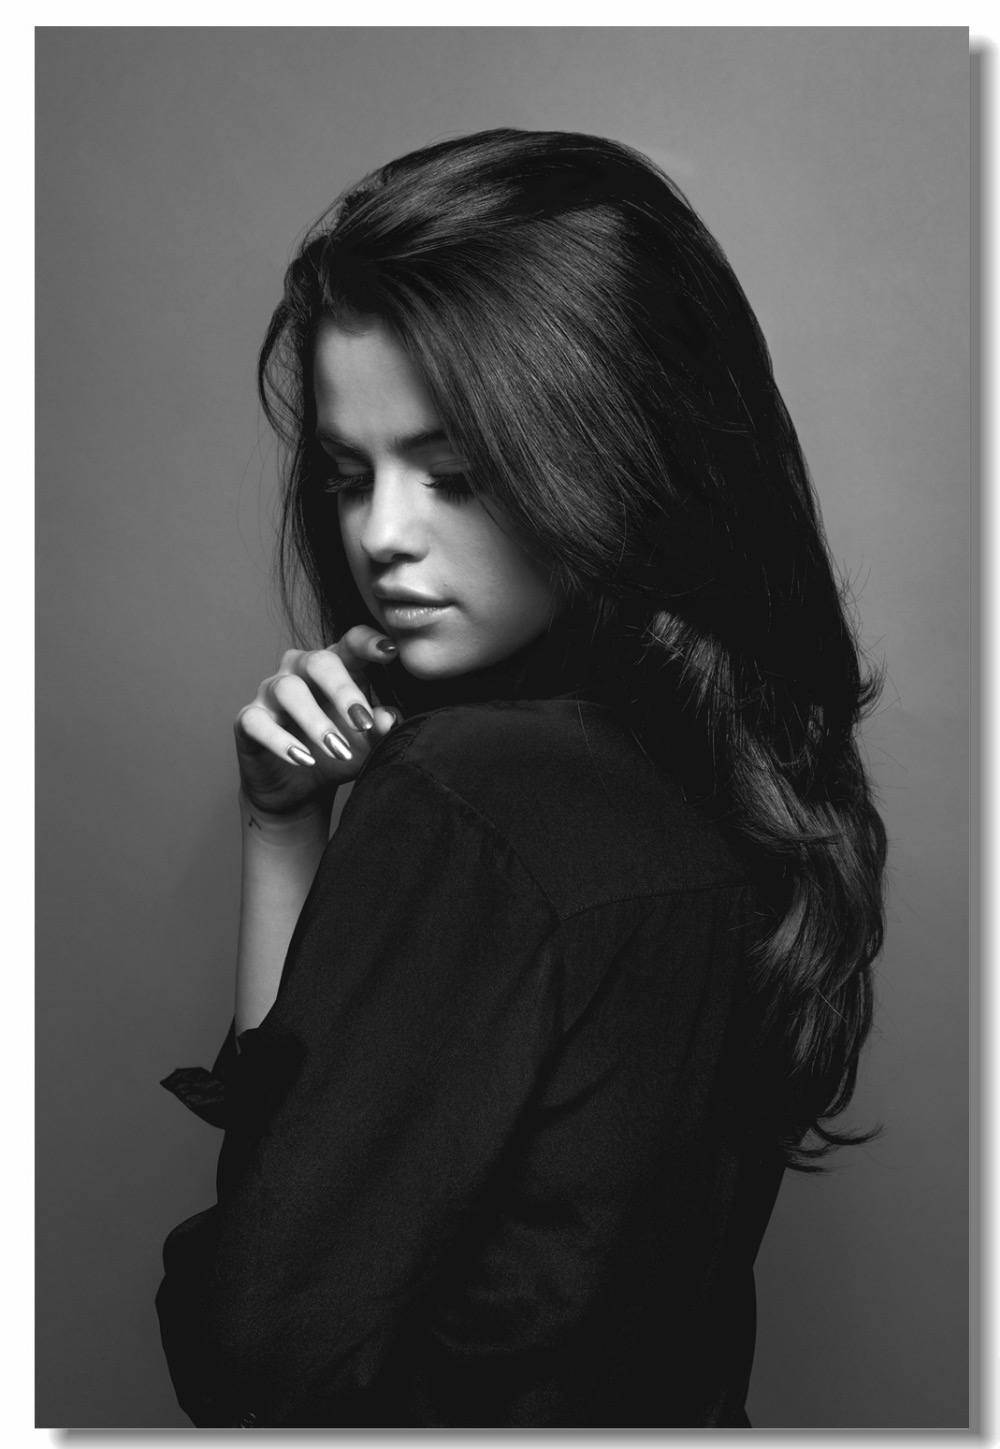 Selena Gomez Monochrome Wallpapers